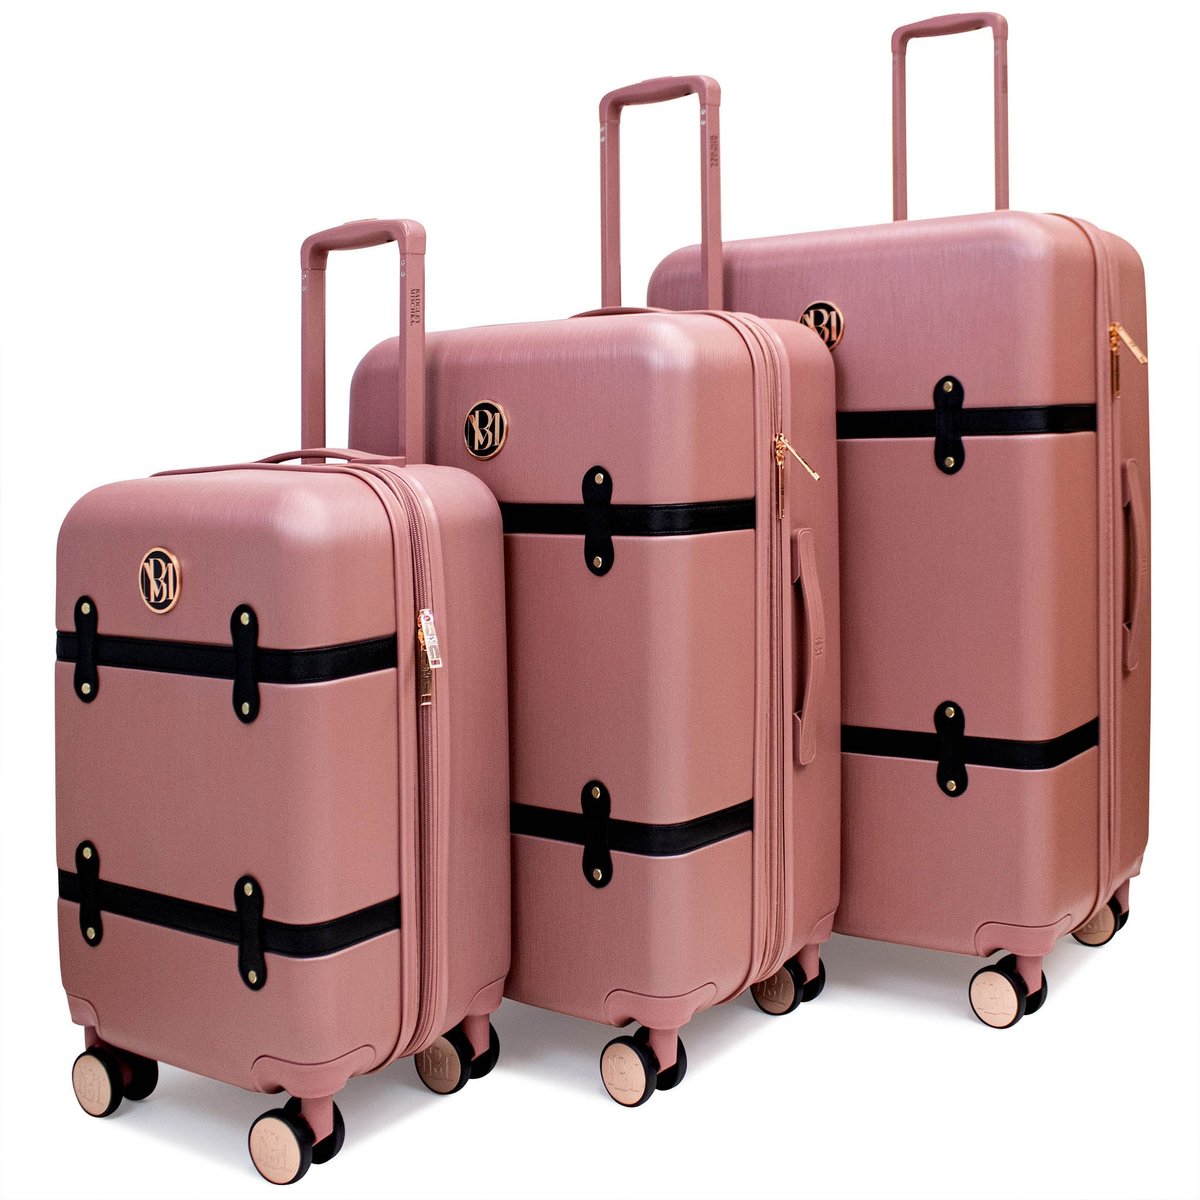 Badgley Mischka Luggage Champagne Grace 3 Piece Luggage Set